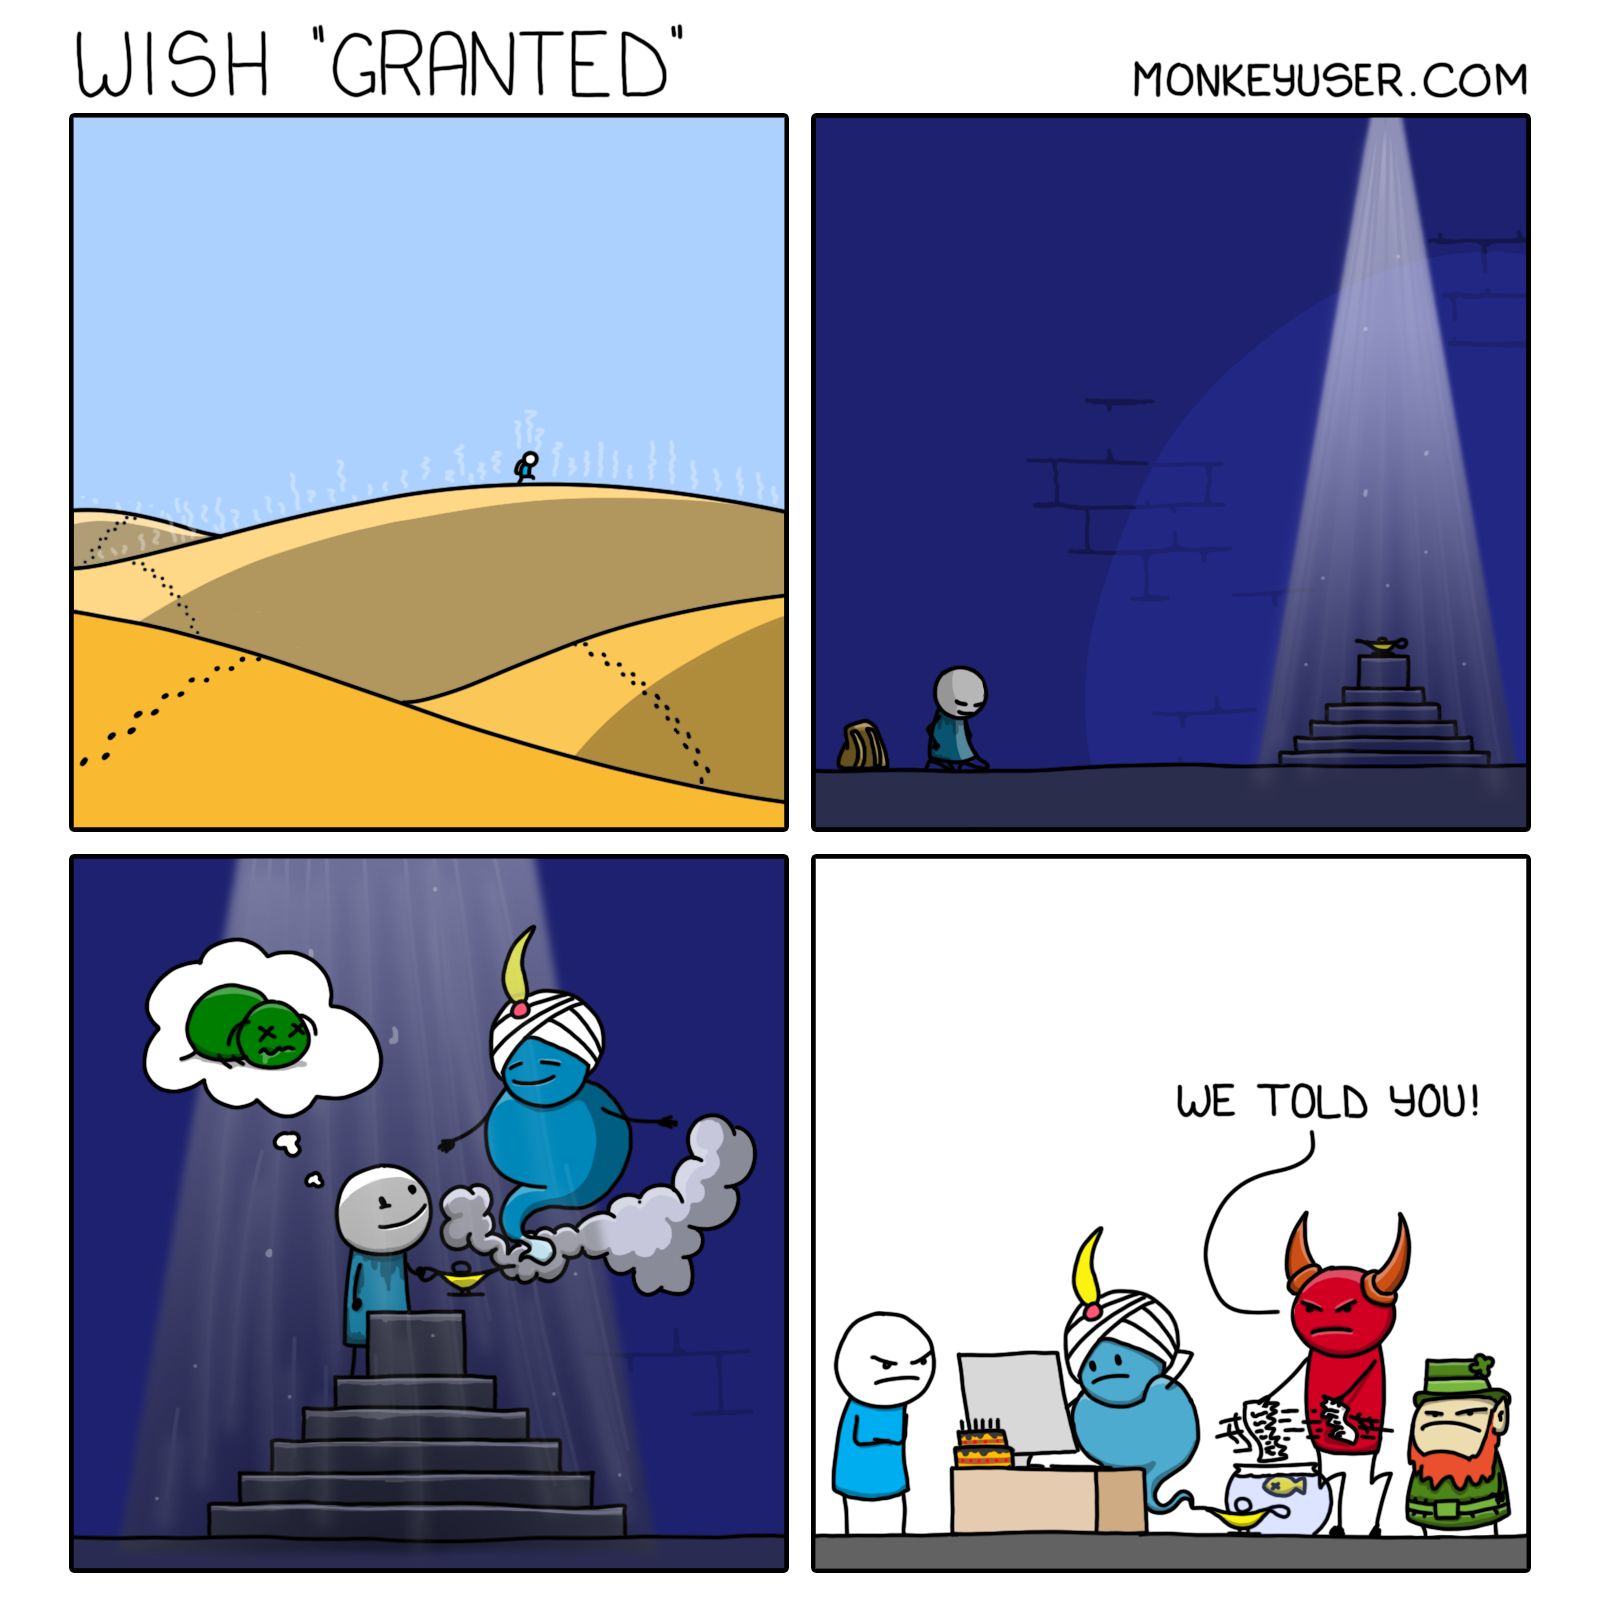 Wish ‘Granted’